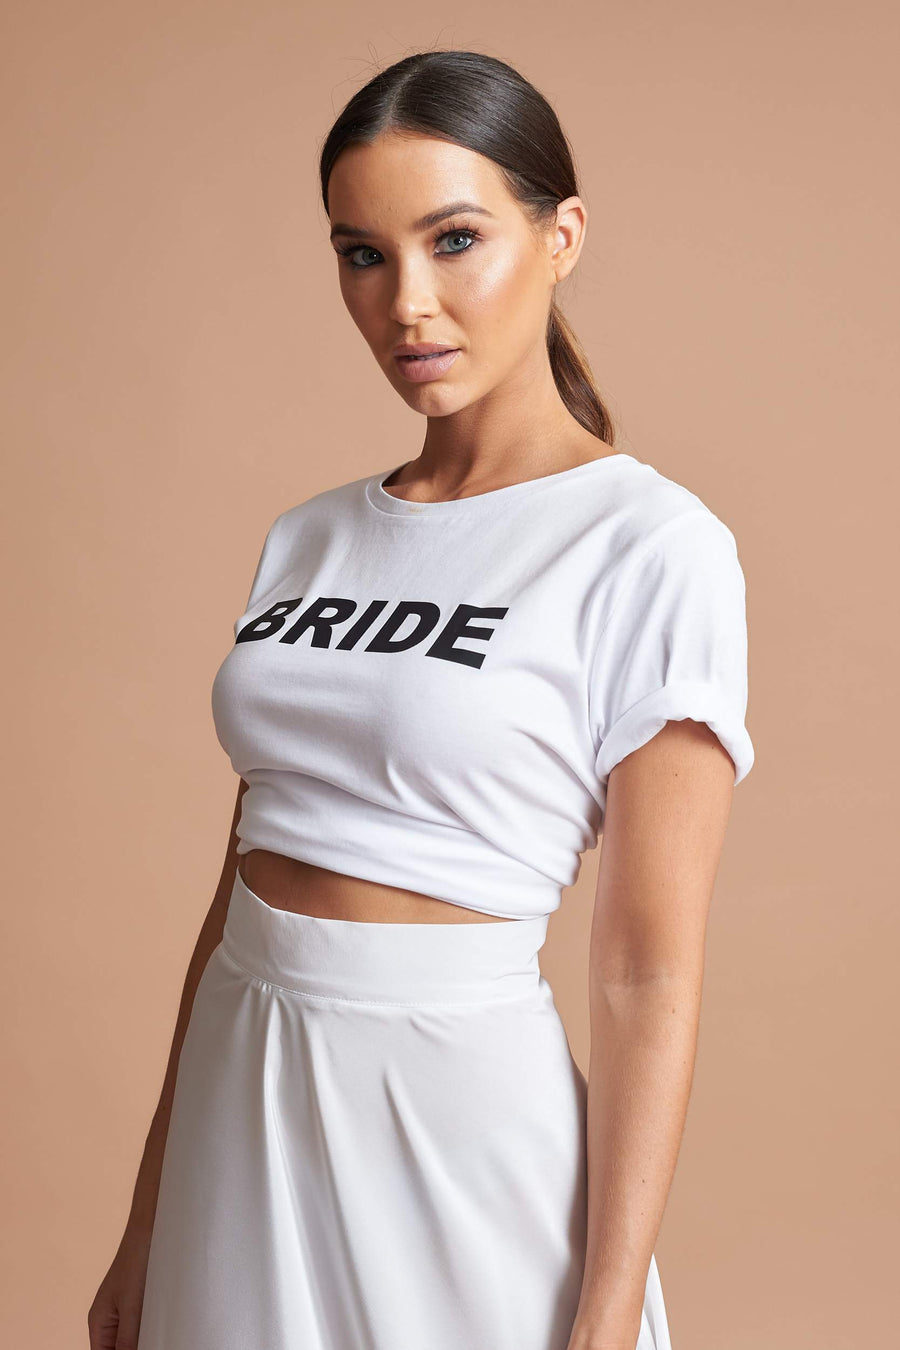 Bride Slogan T-Shirt